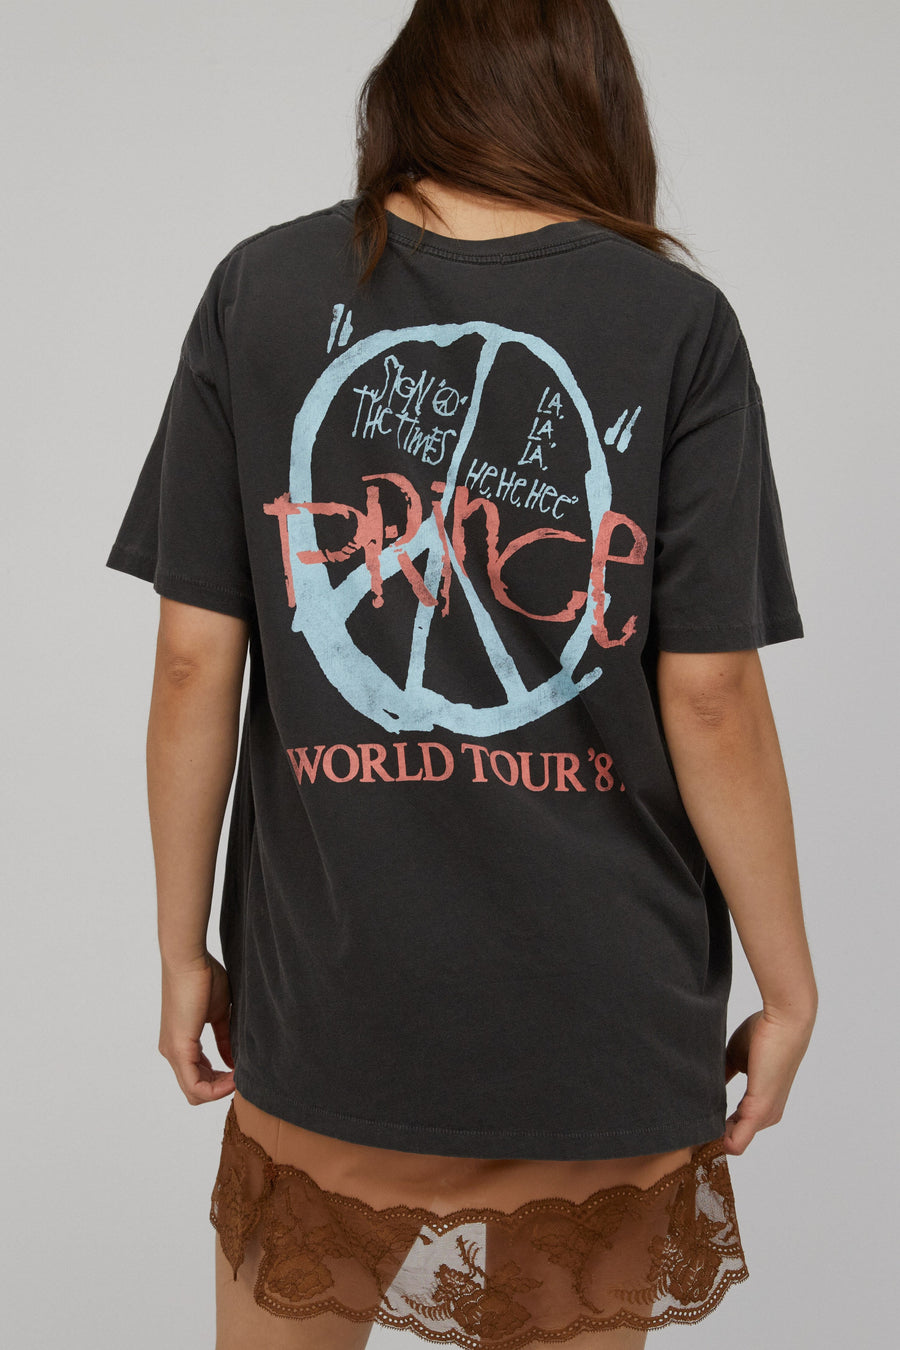 Daydreamer Prince World Tour 1987 Merch Tee - Pigment Black